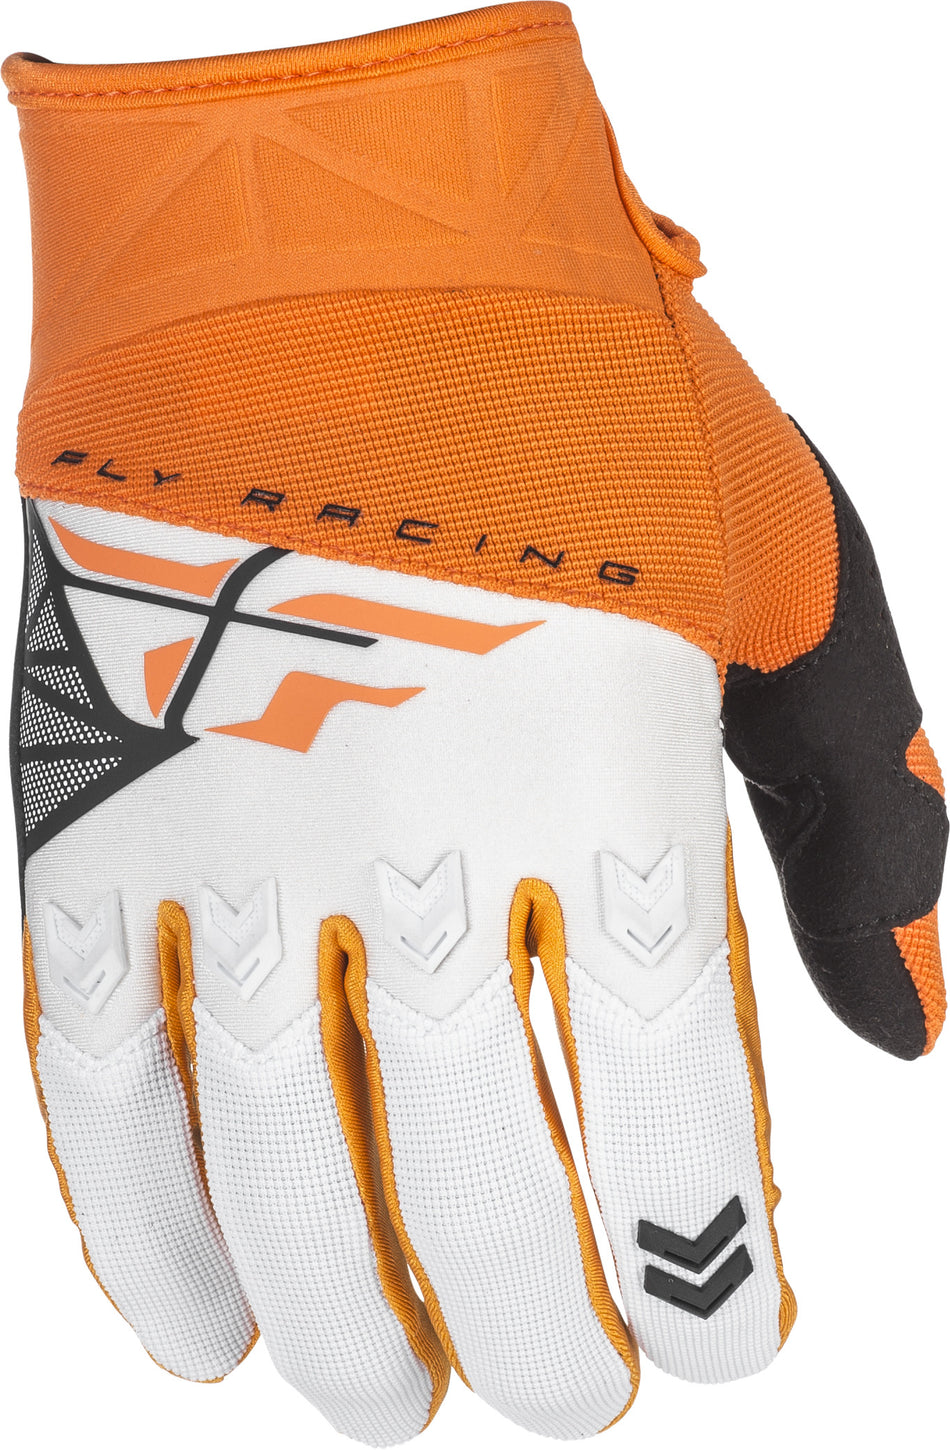 FLY RACING F-16 Gloves Orange/White Sz 8 371-91808